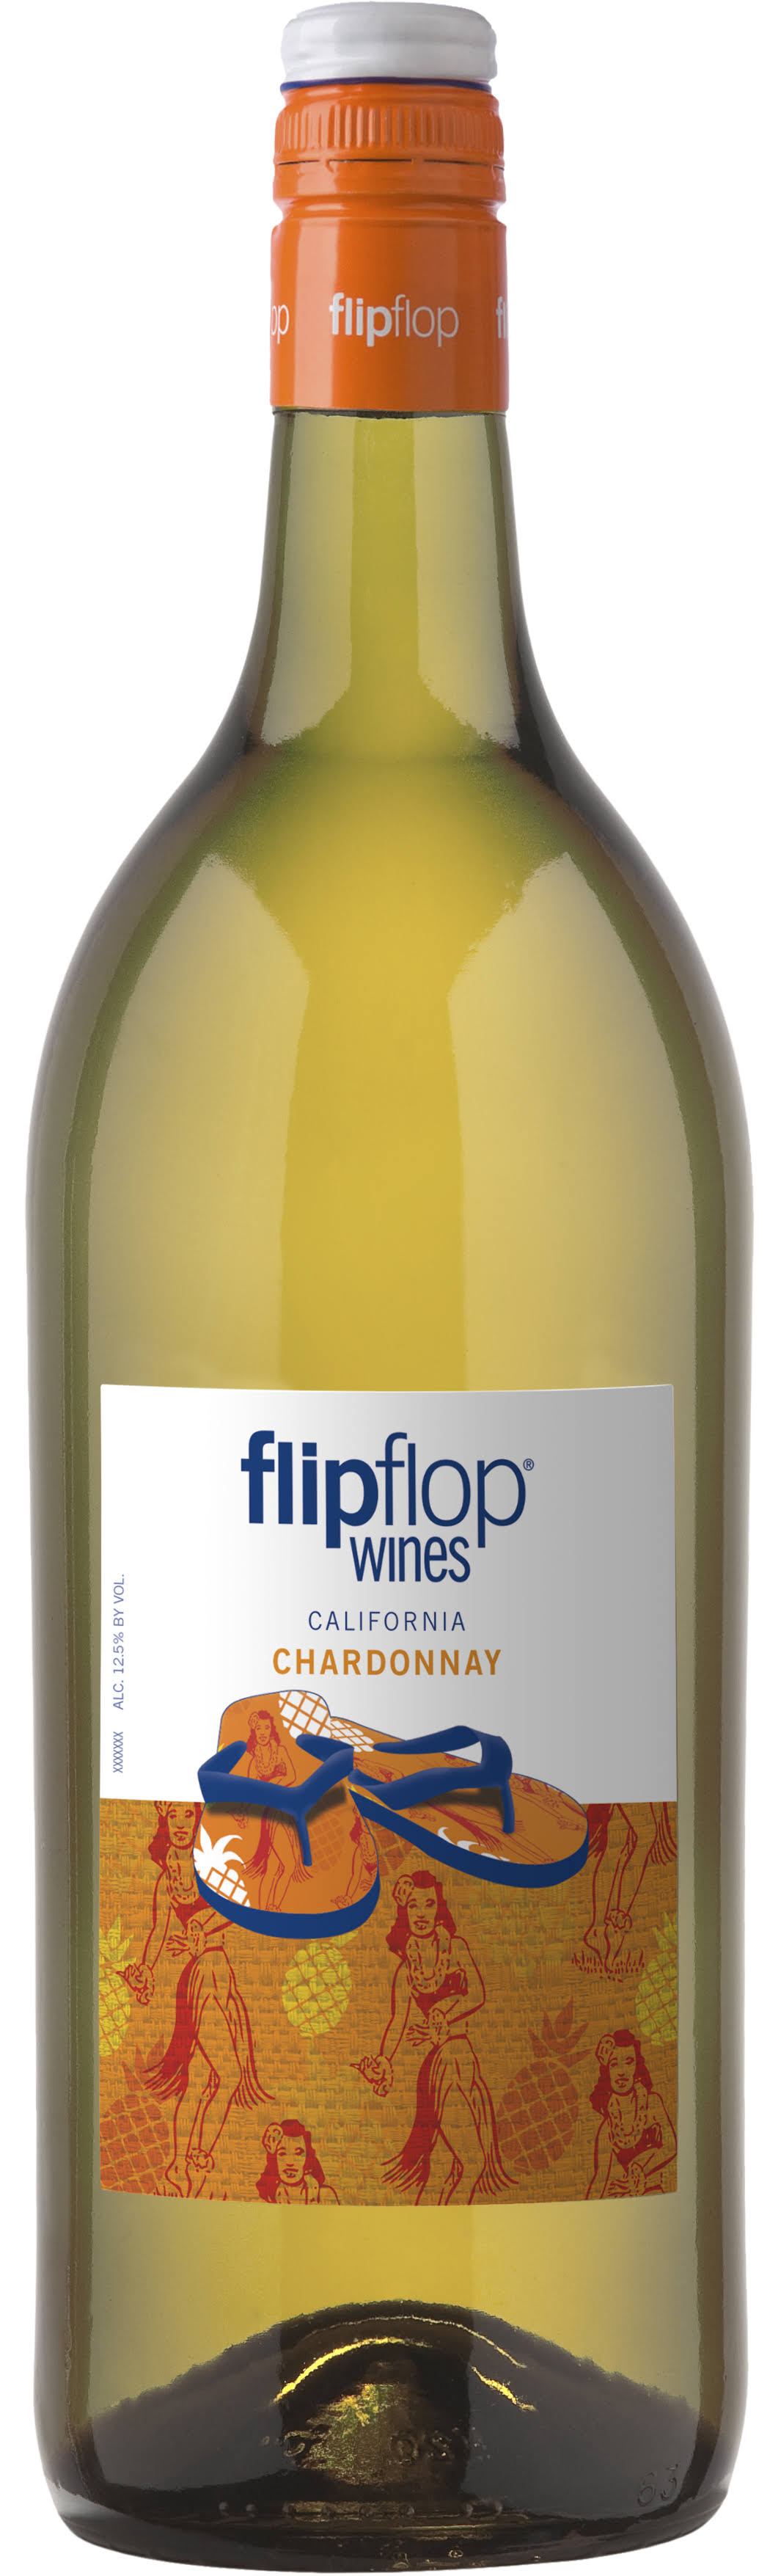 Flipflop Chardonnay, California - 1.5 liter